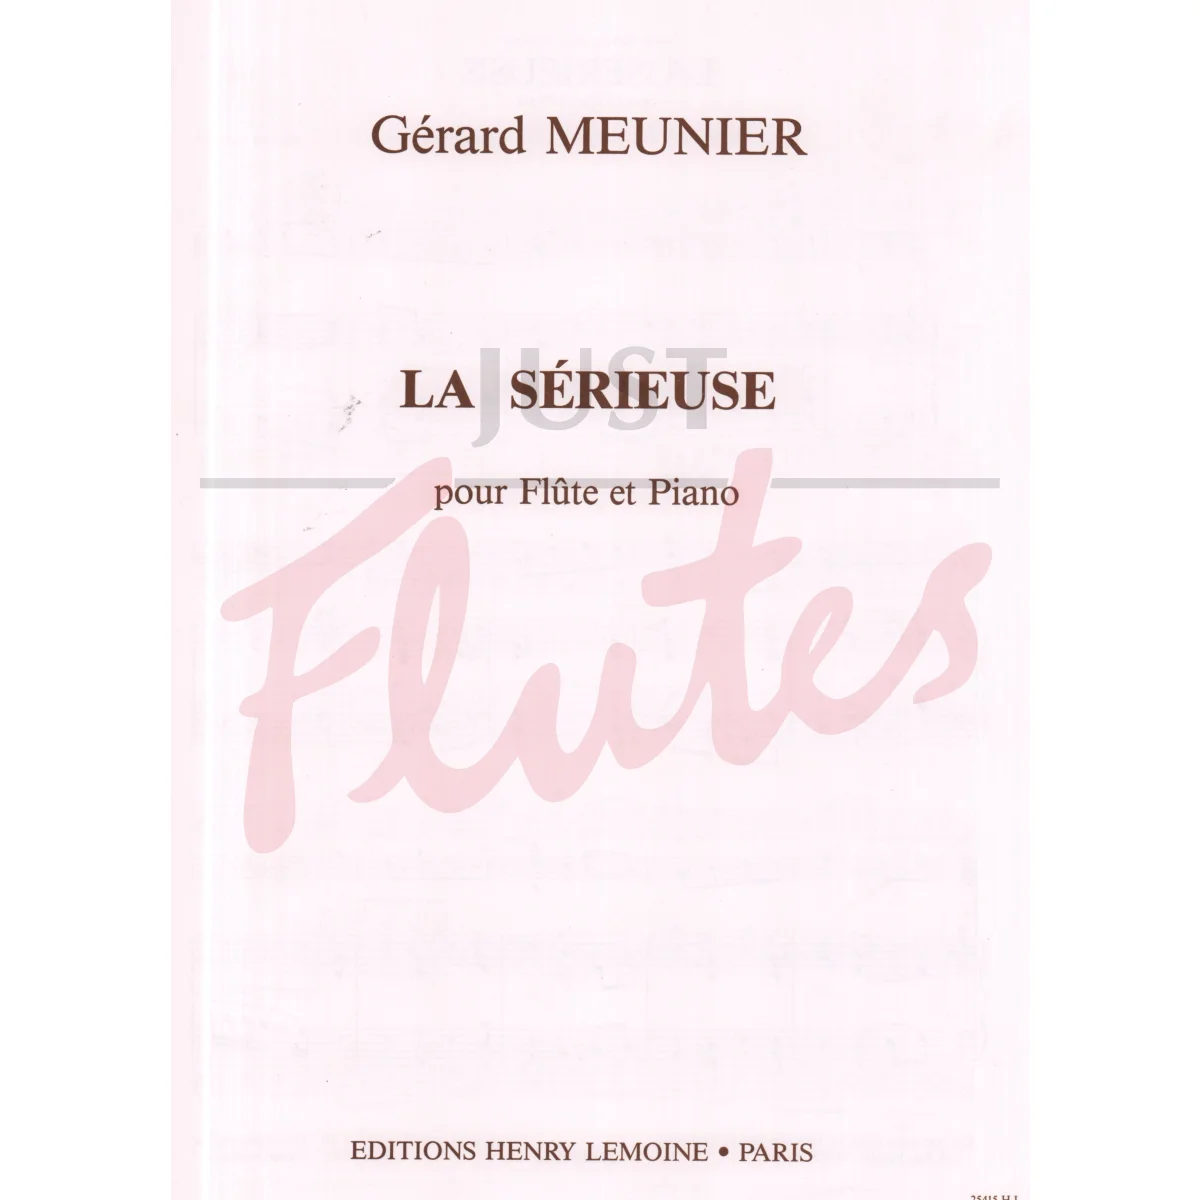 La Sérieuse for Flute and Piano